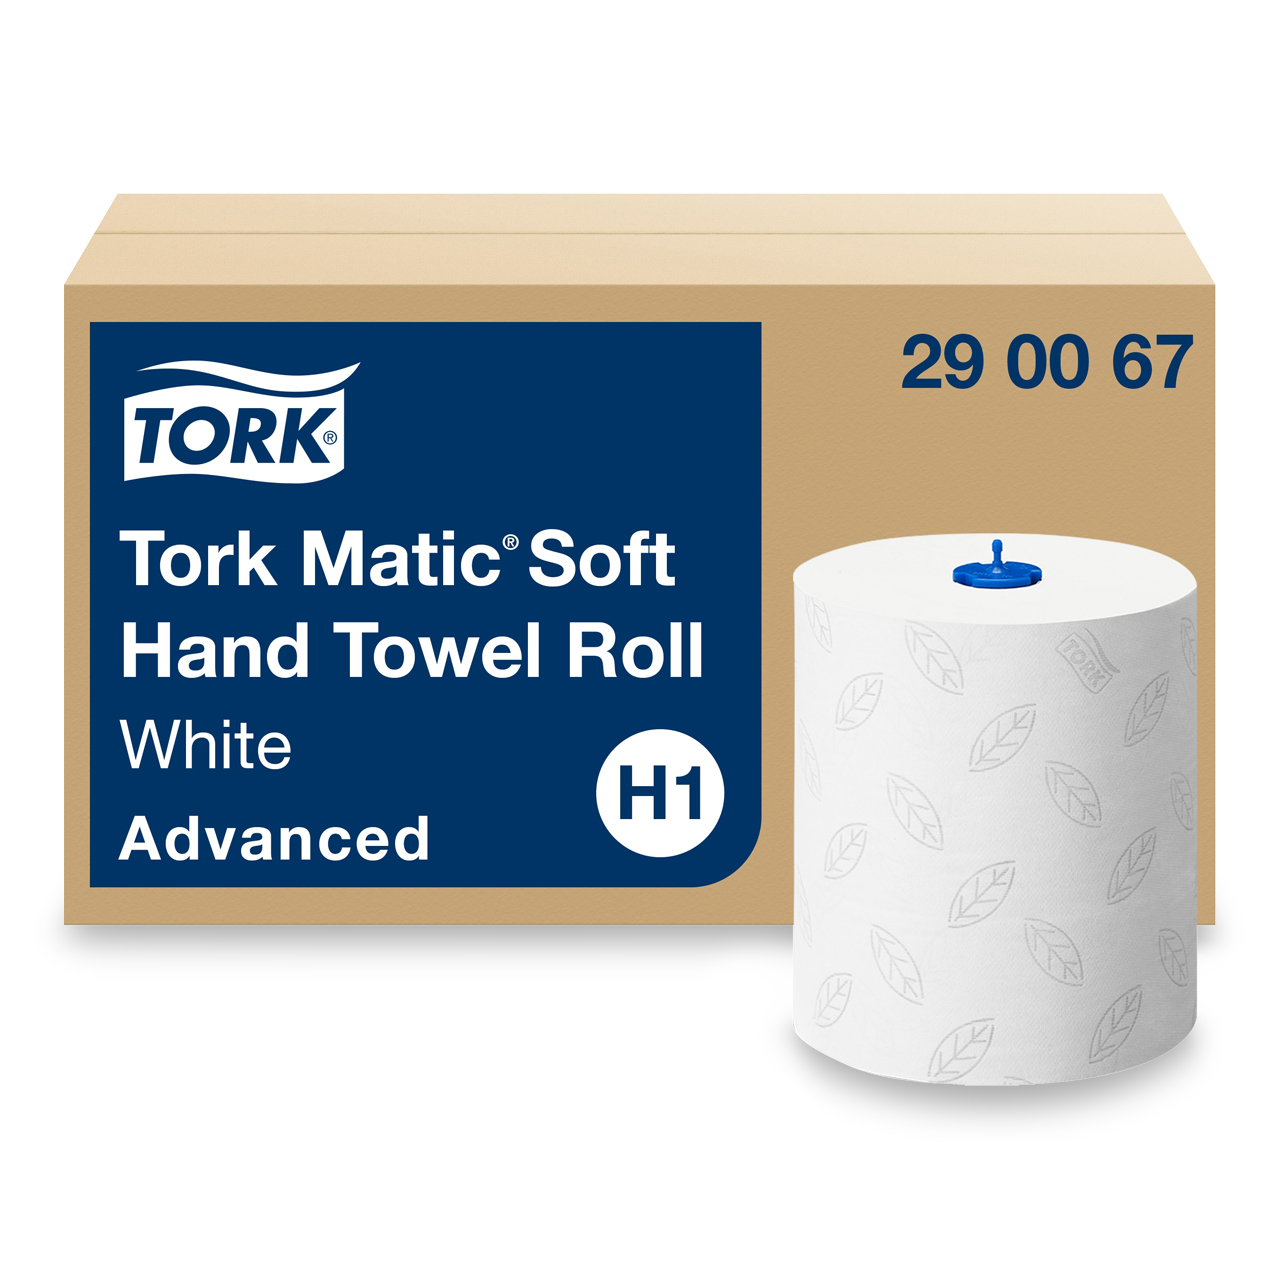 Tork Matic Rouleau d'essuie-mains H1 Advanced